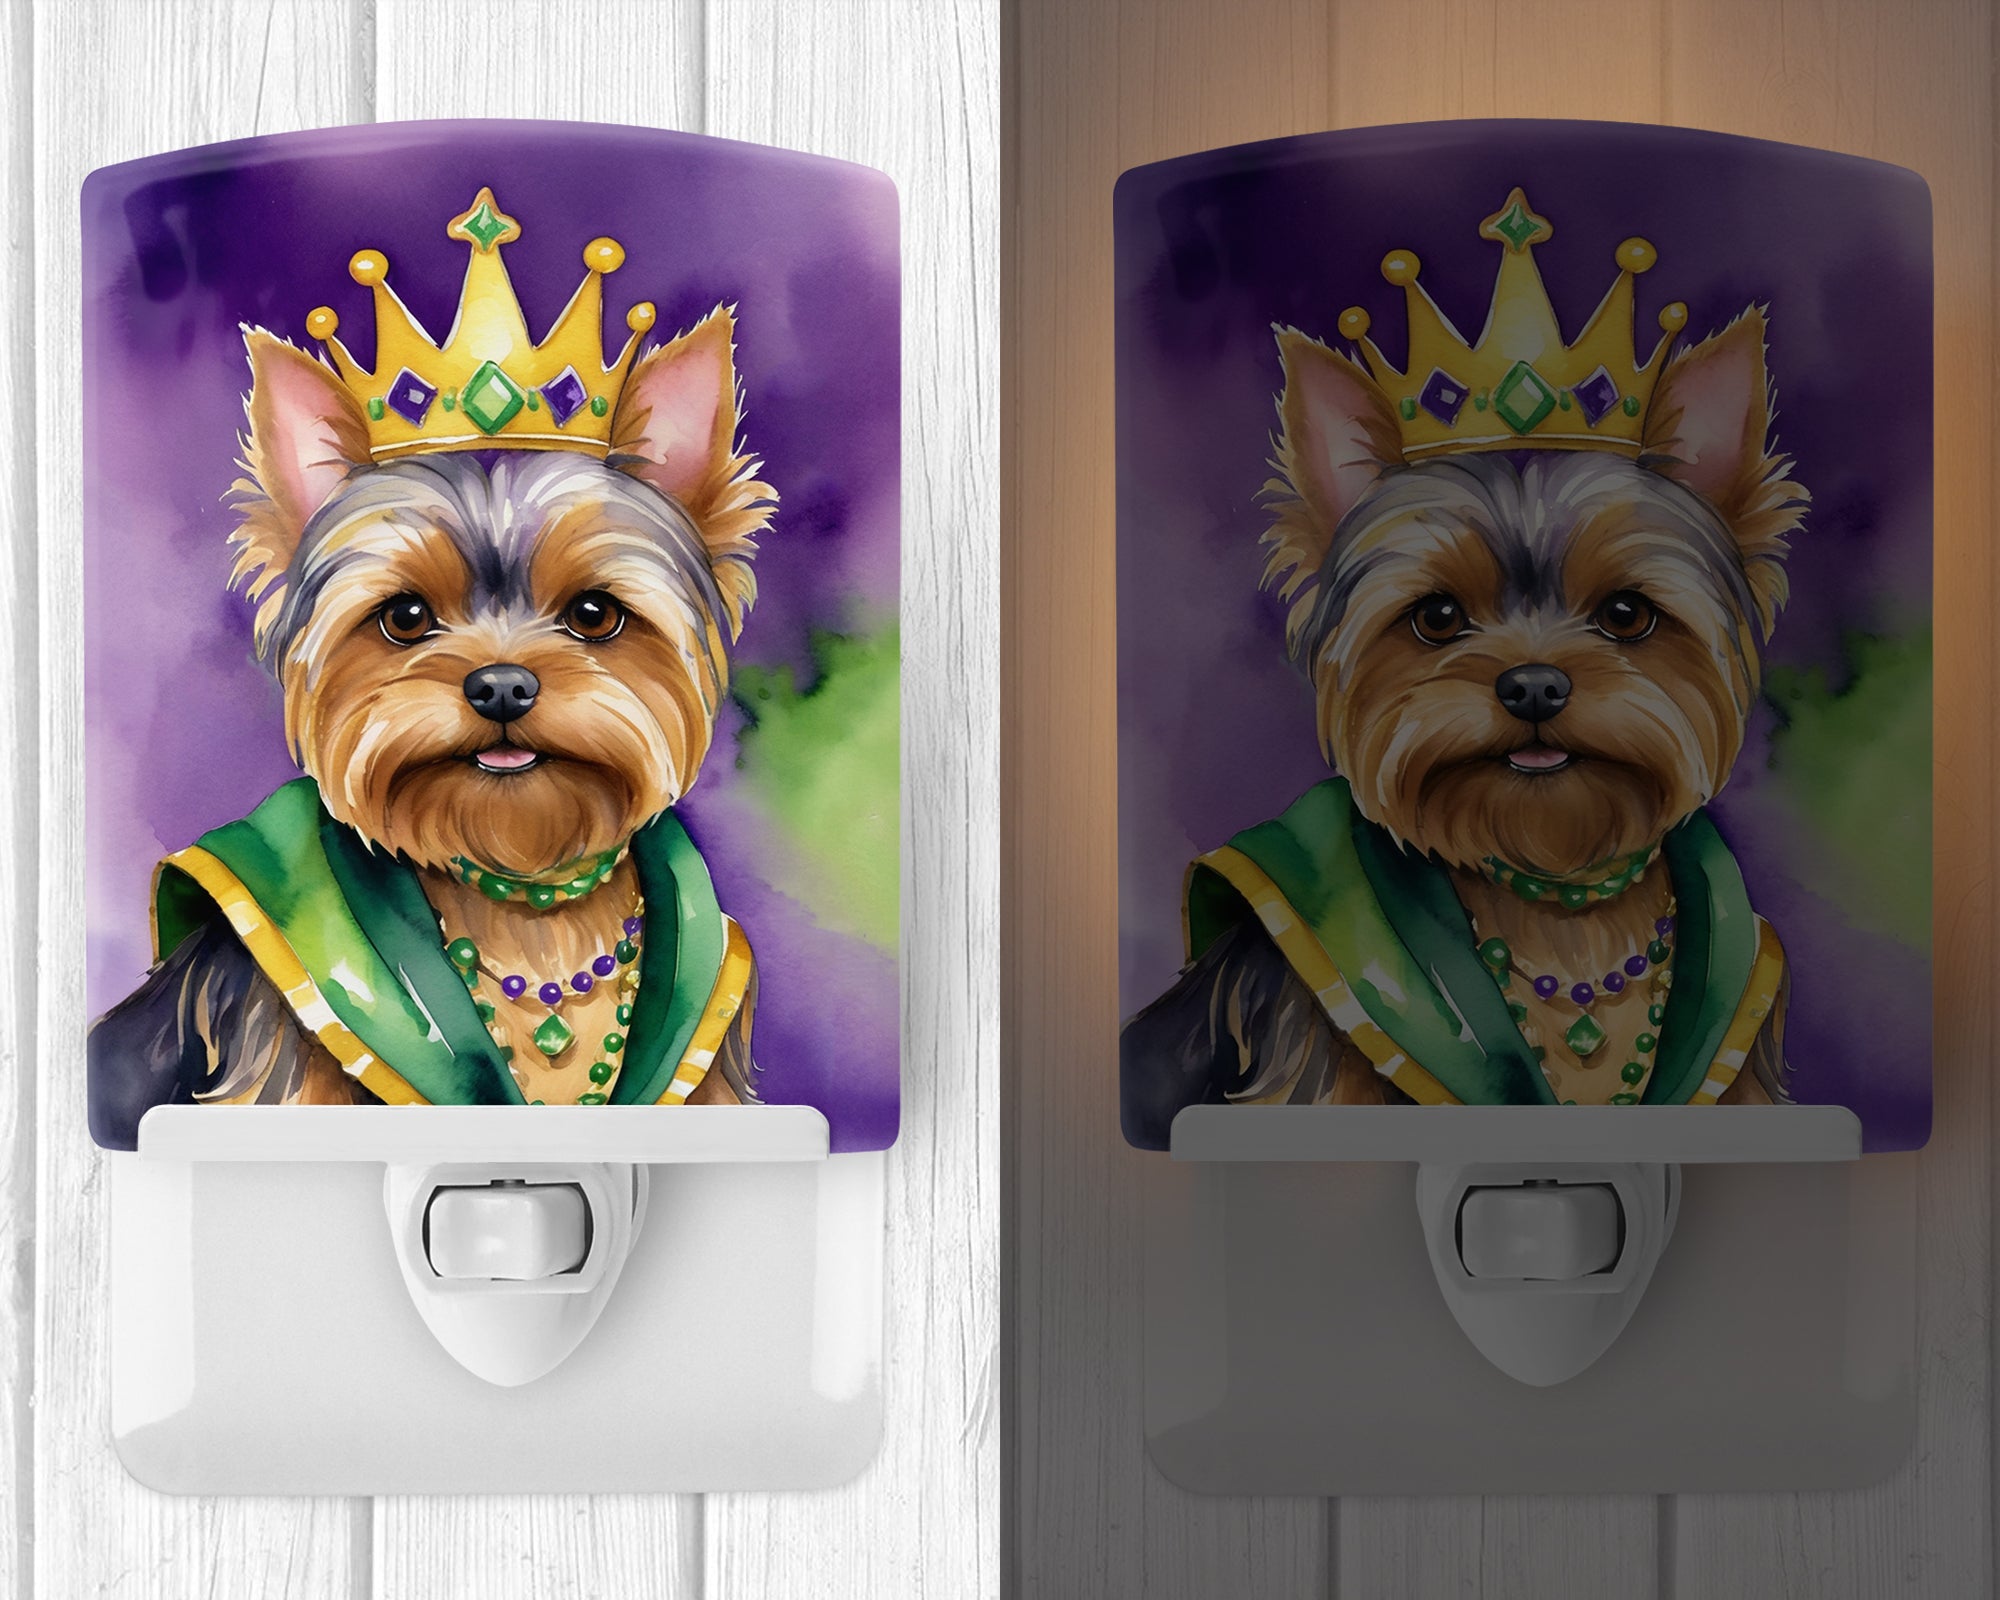 Buy this Yorkshire Terrier King of Mardi Gras Ceramic Night Light